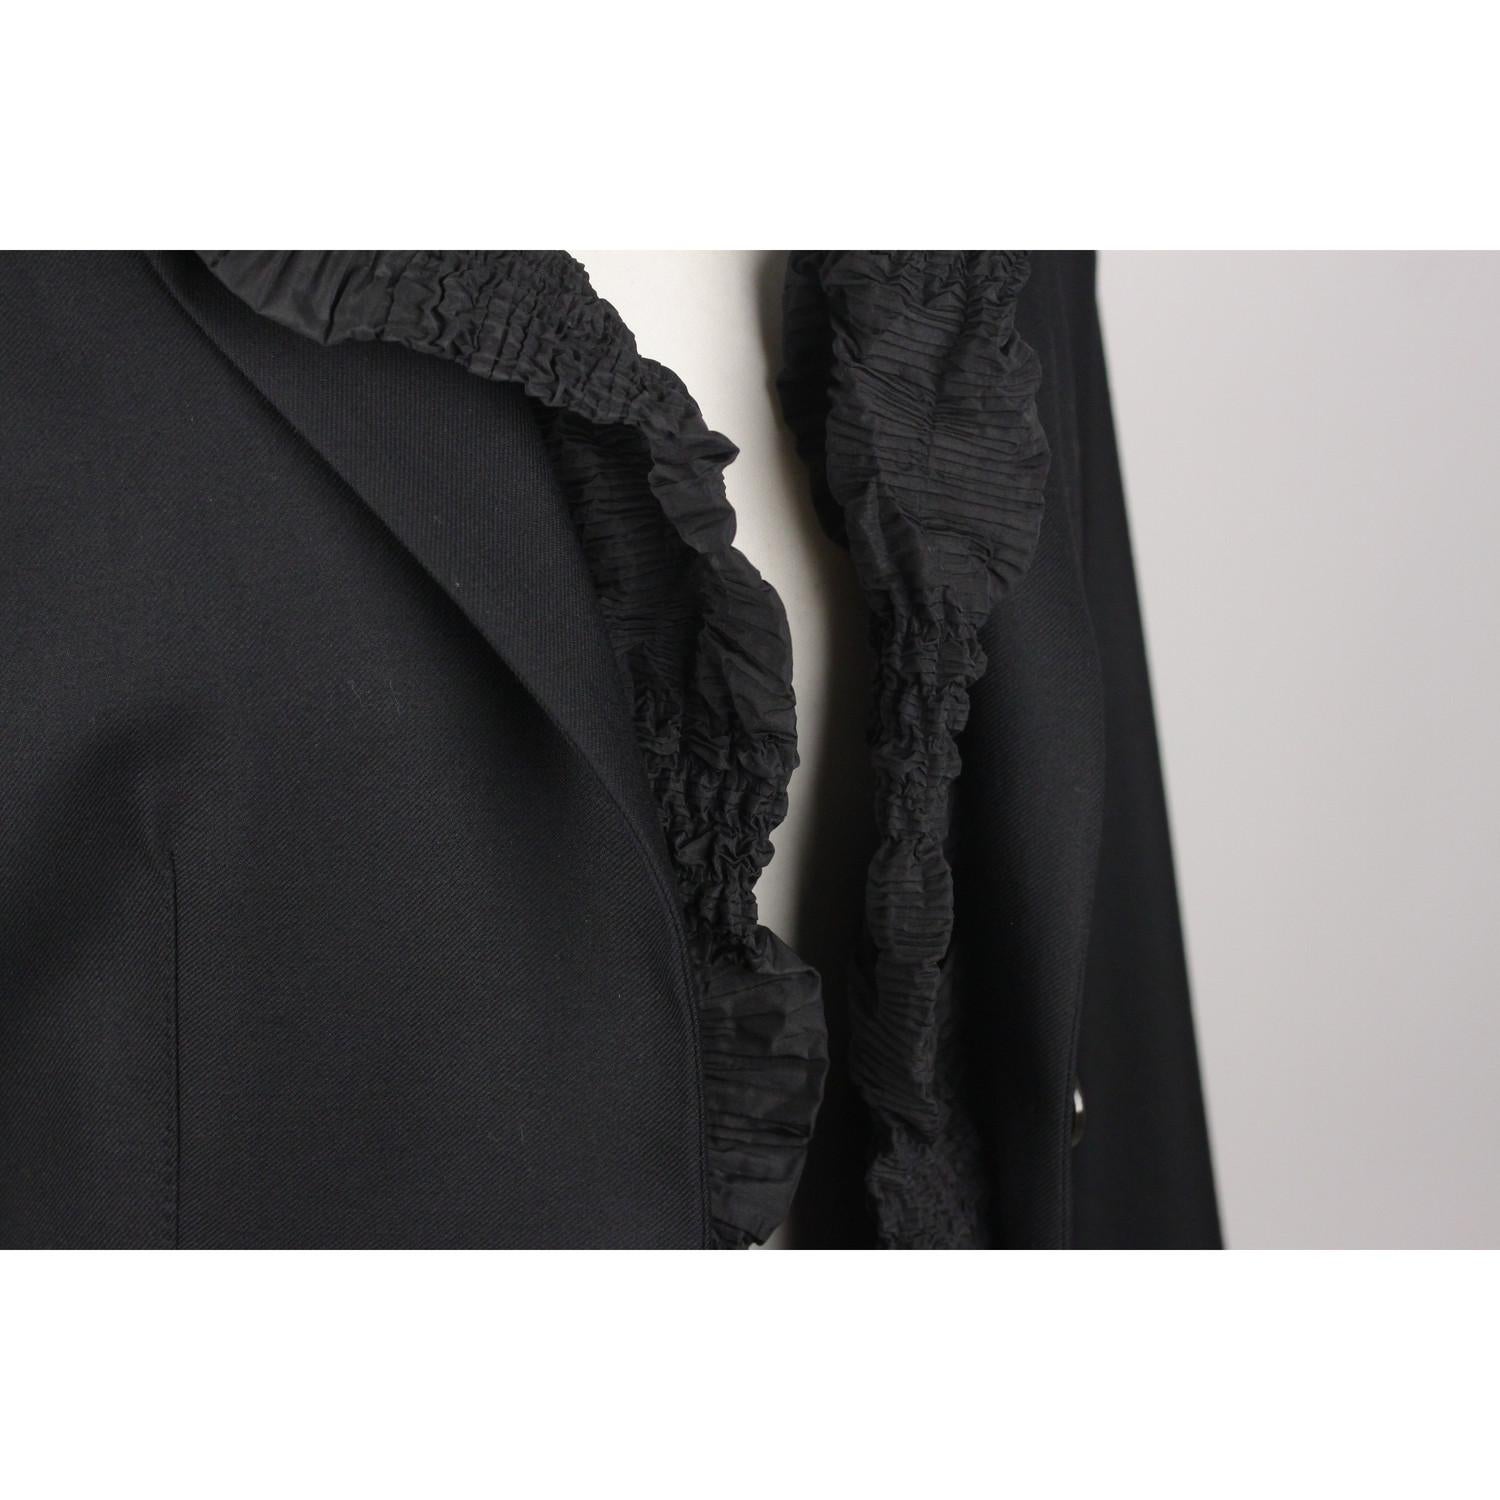 Yves Saint Laurent Black Wool Pant Suit with Ruffles Size 36 4